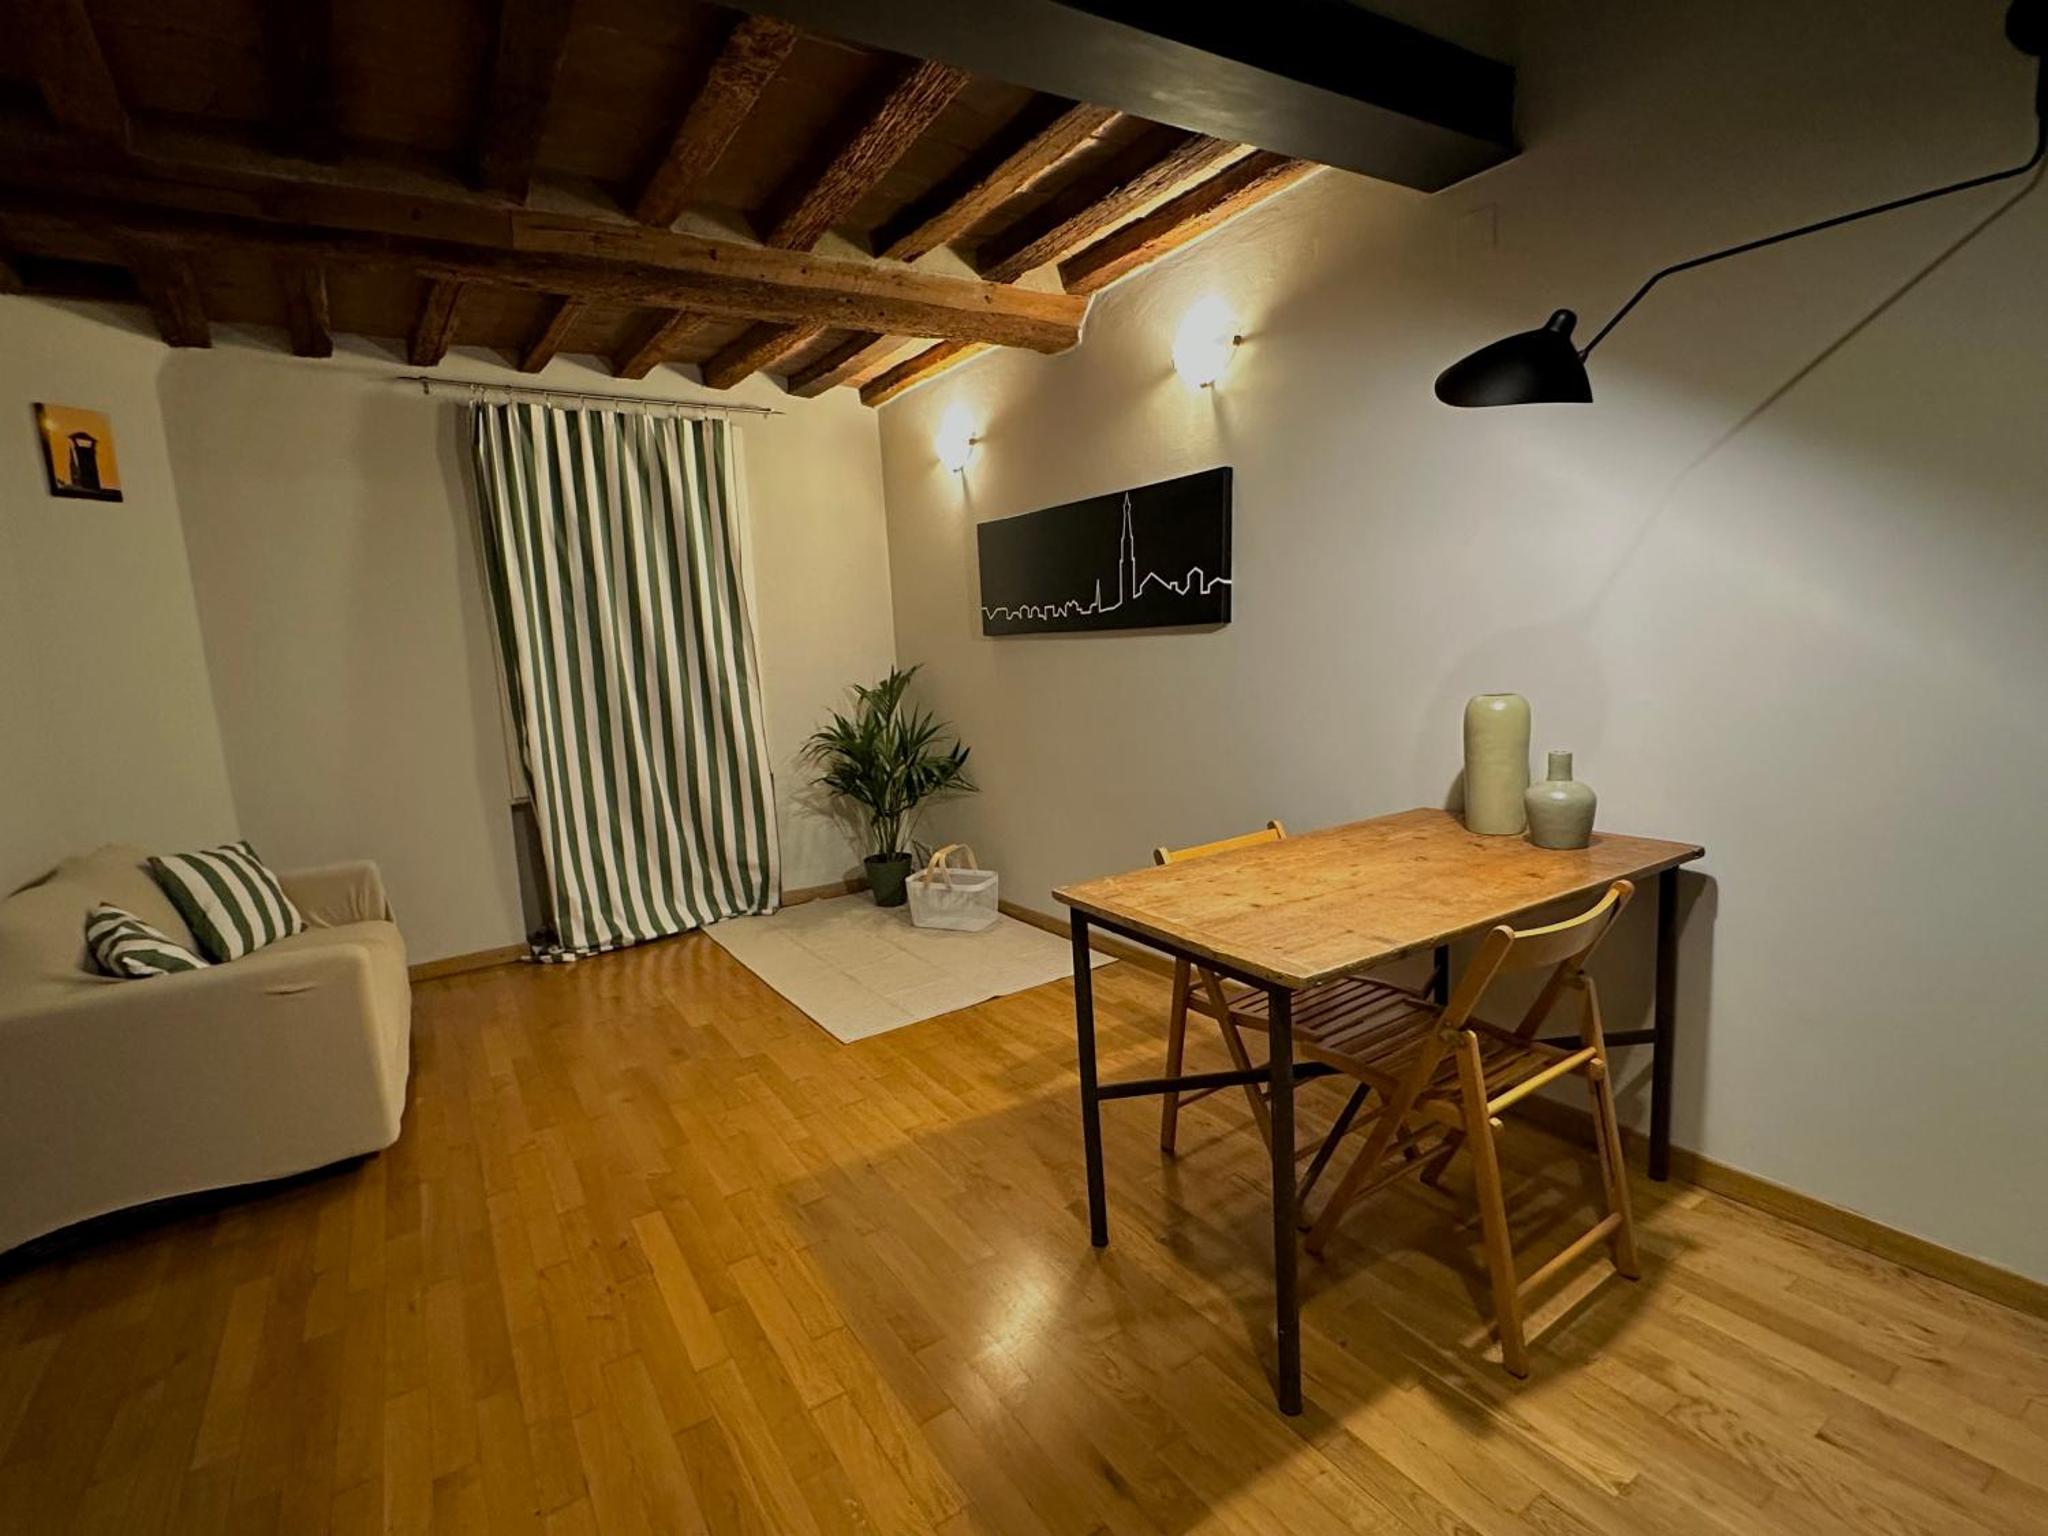 Maison Vert appartamento in centro storico a Modena